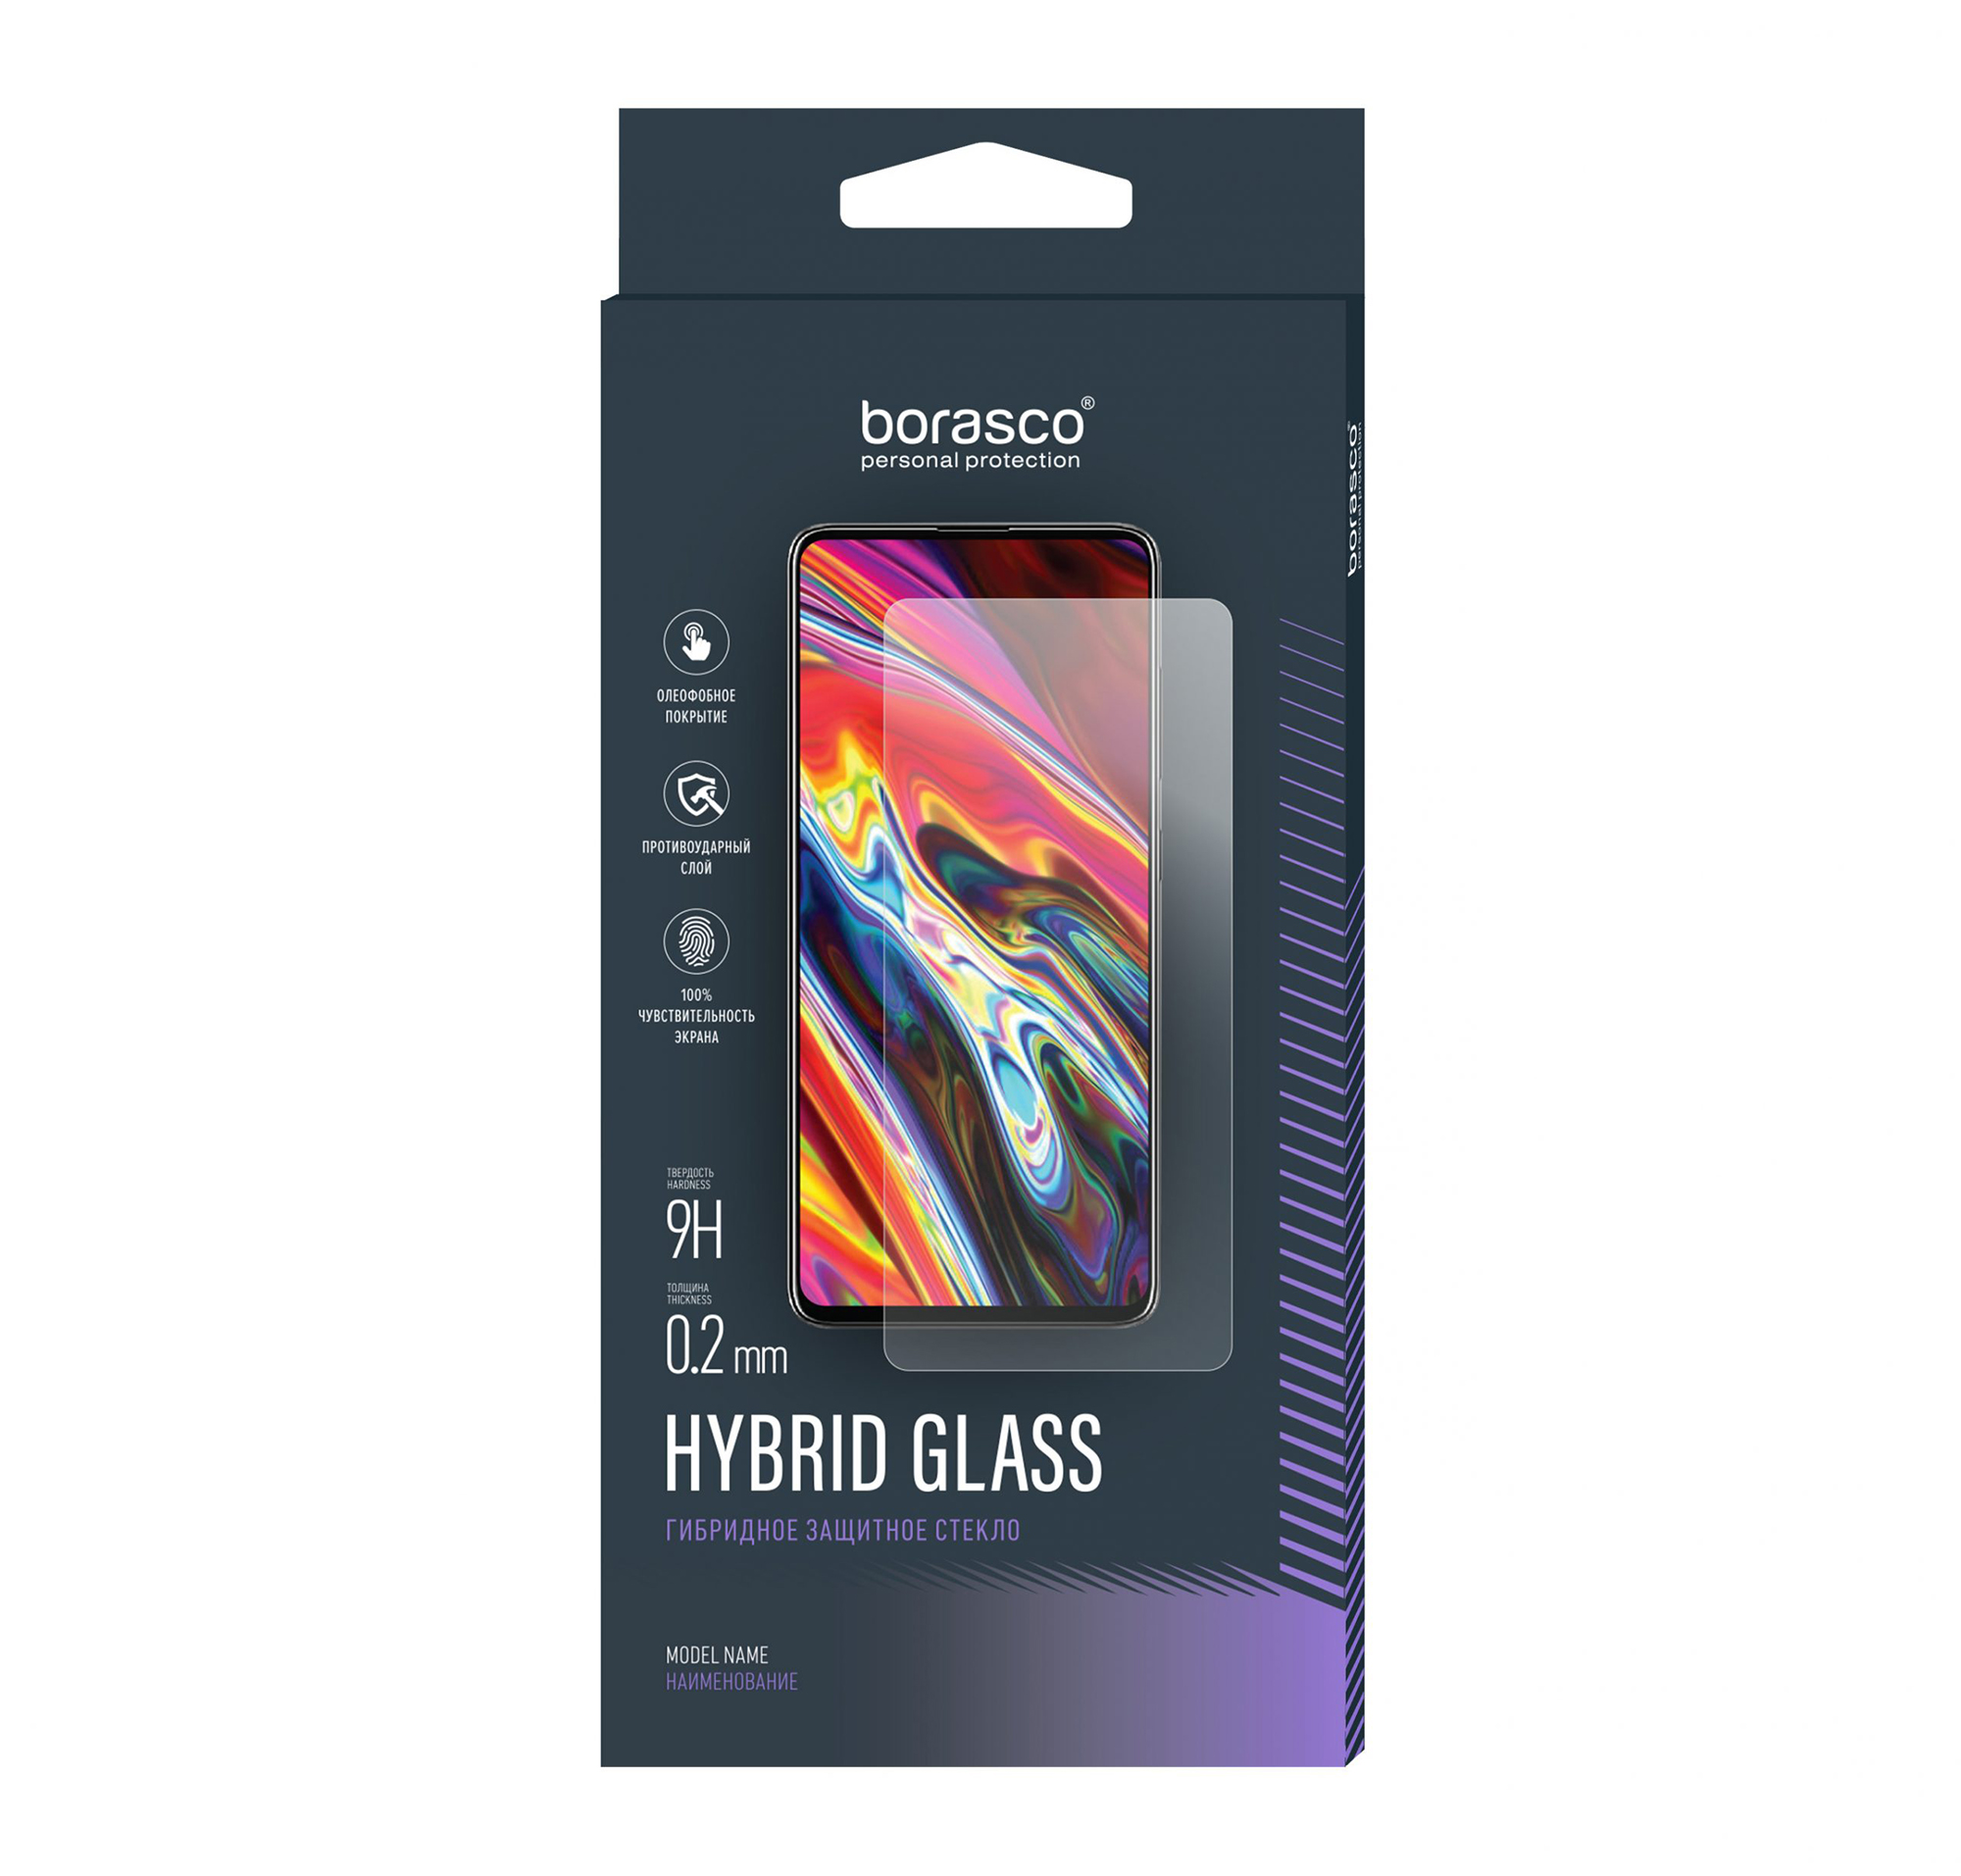 Защитное стекло Hybrid Glass для ZTE Blade L210 стекло защитное zte blade a71 прозрачное